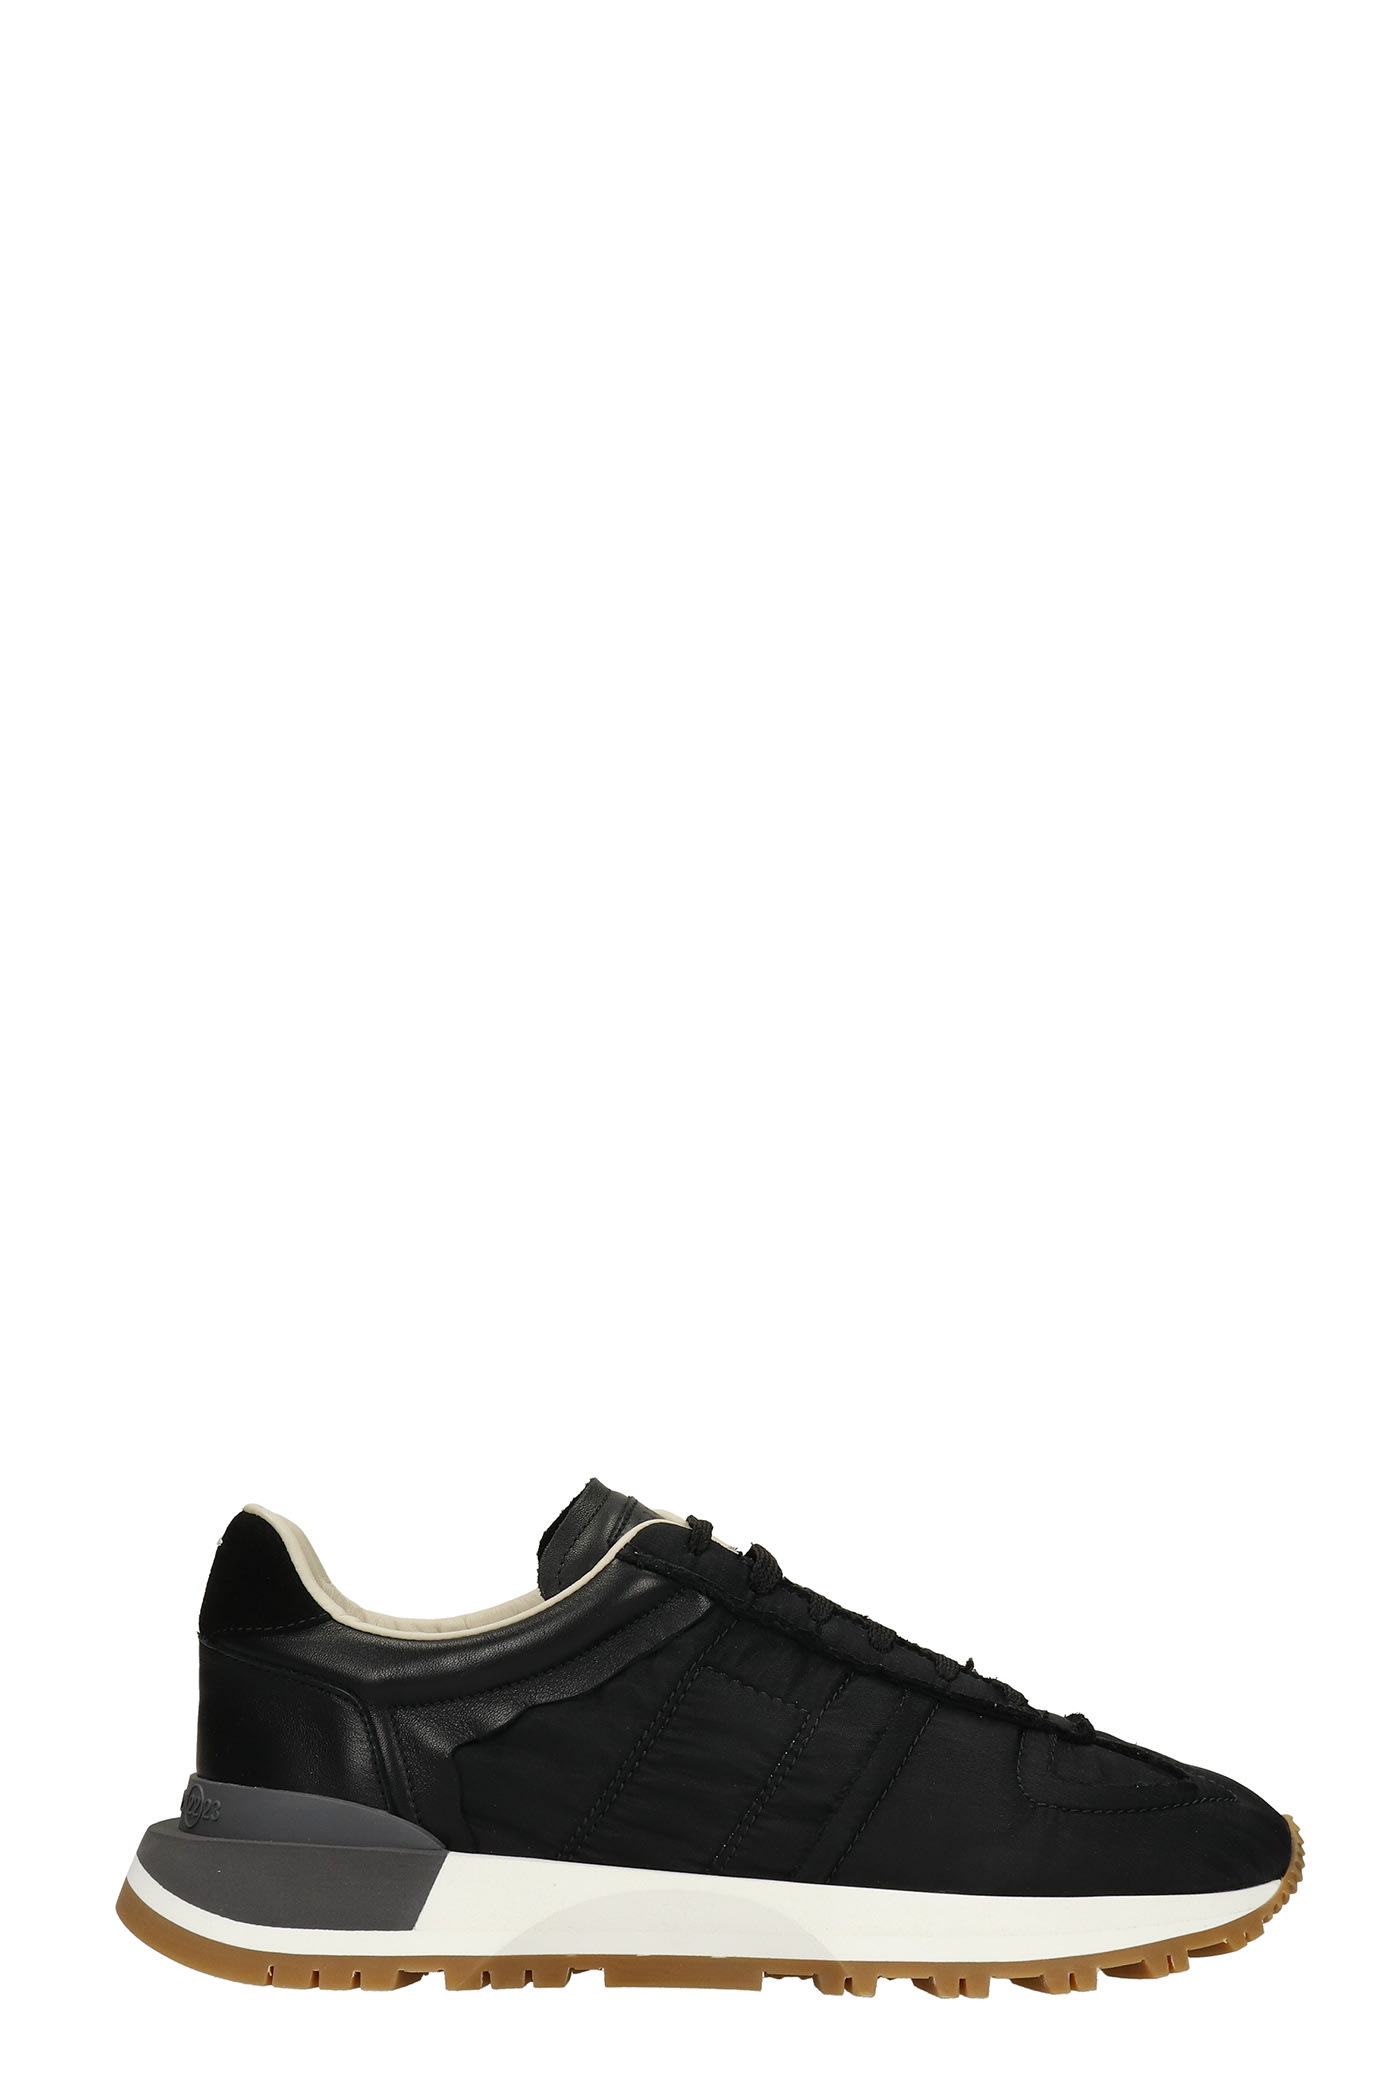 Maison Margiela Sneakers In Black Nylon